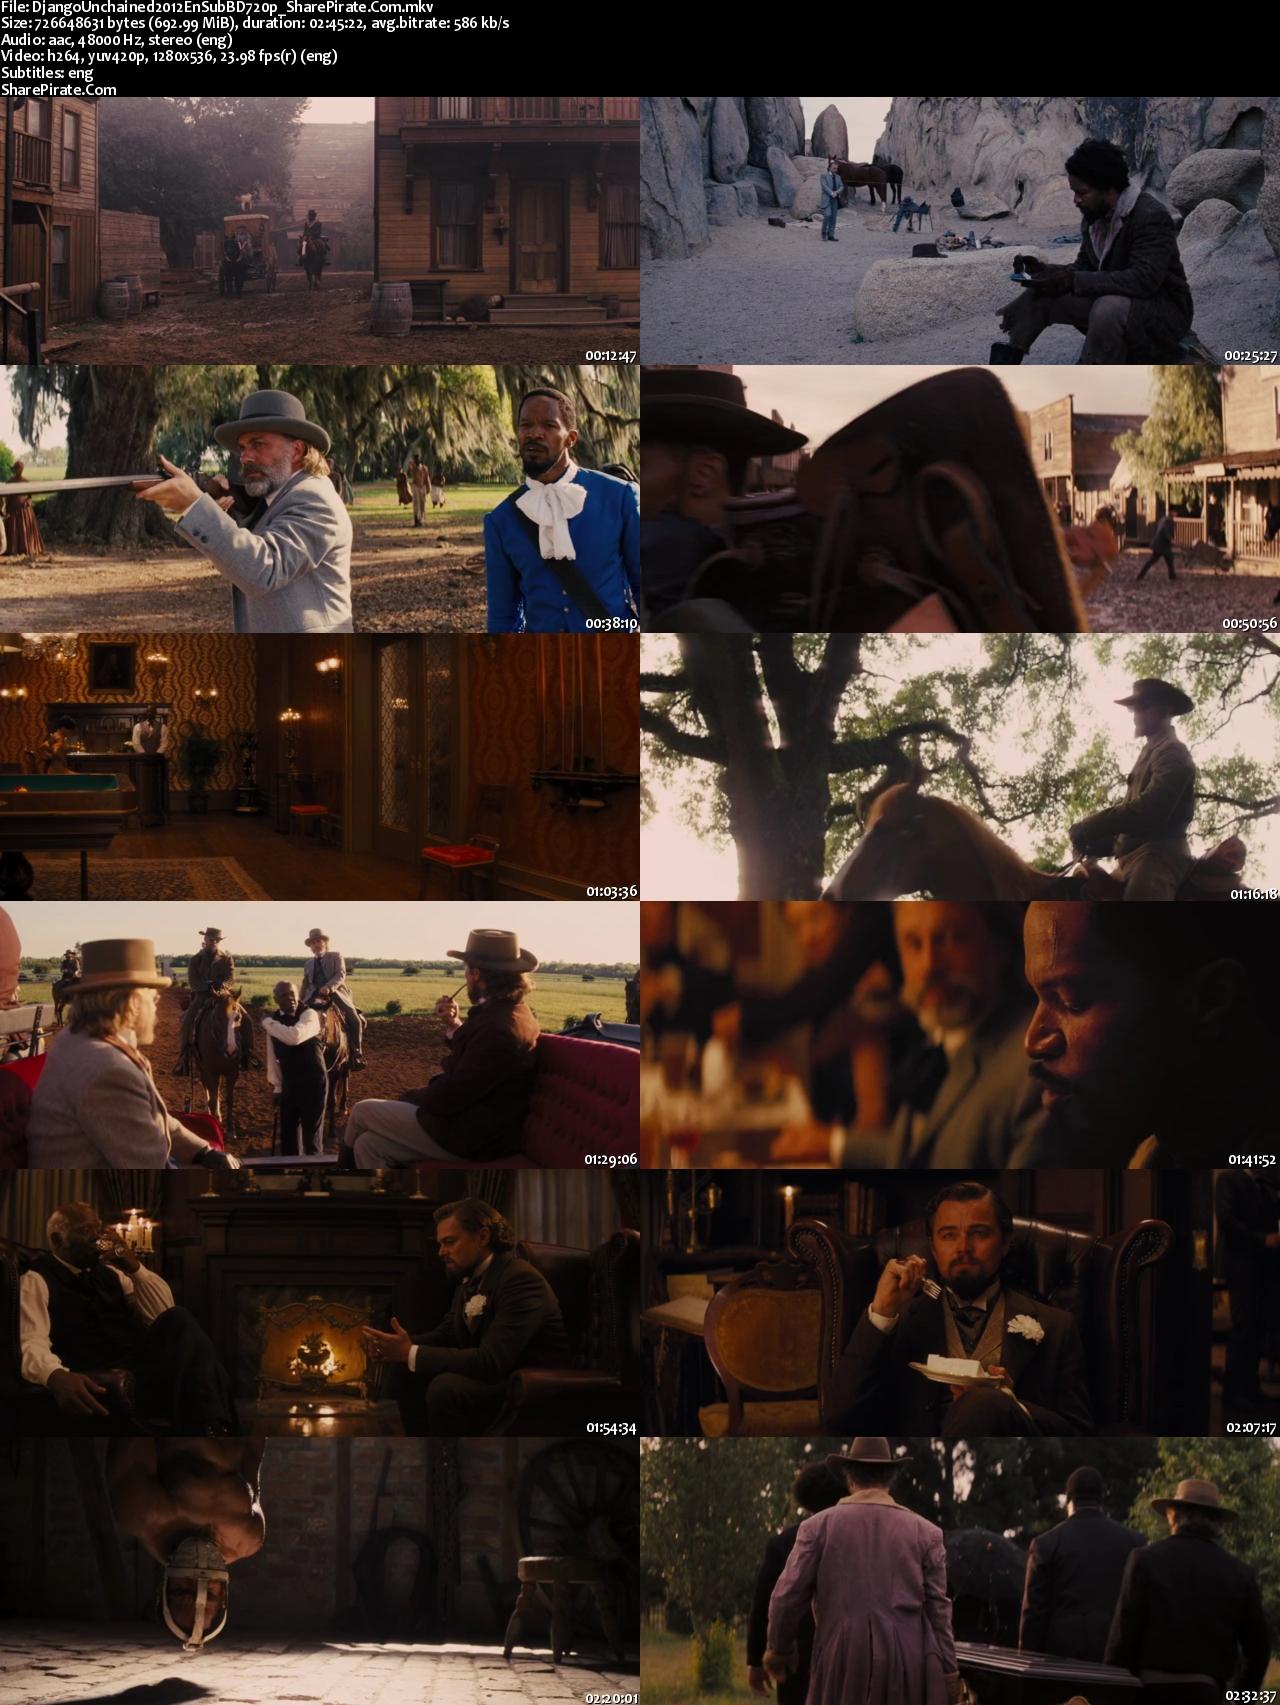 Django Unchained [2012] Dvd-Rip Xvid